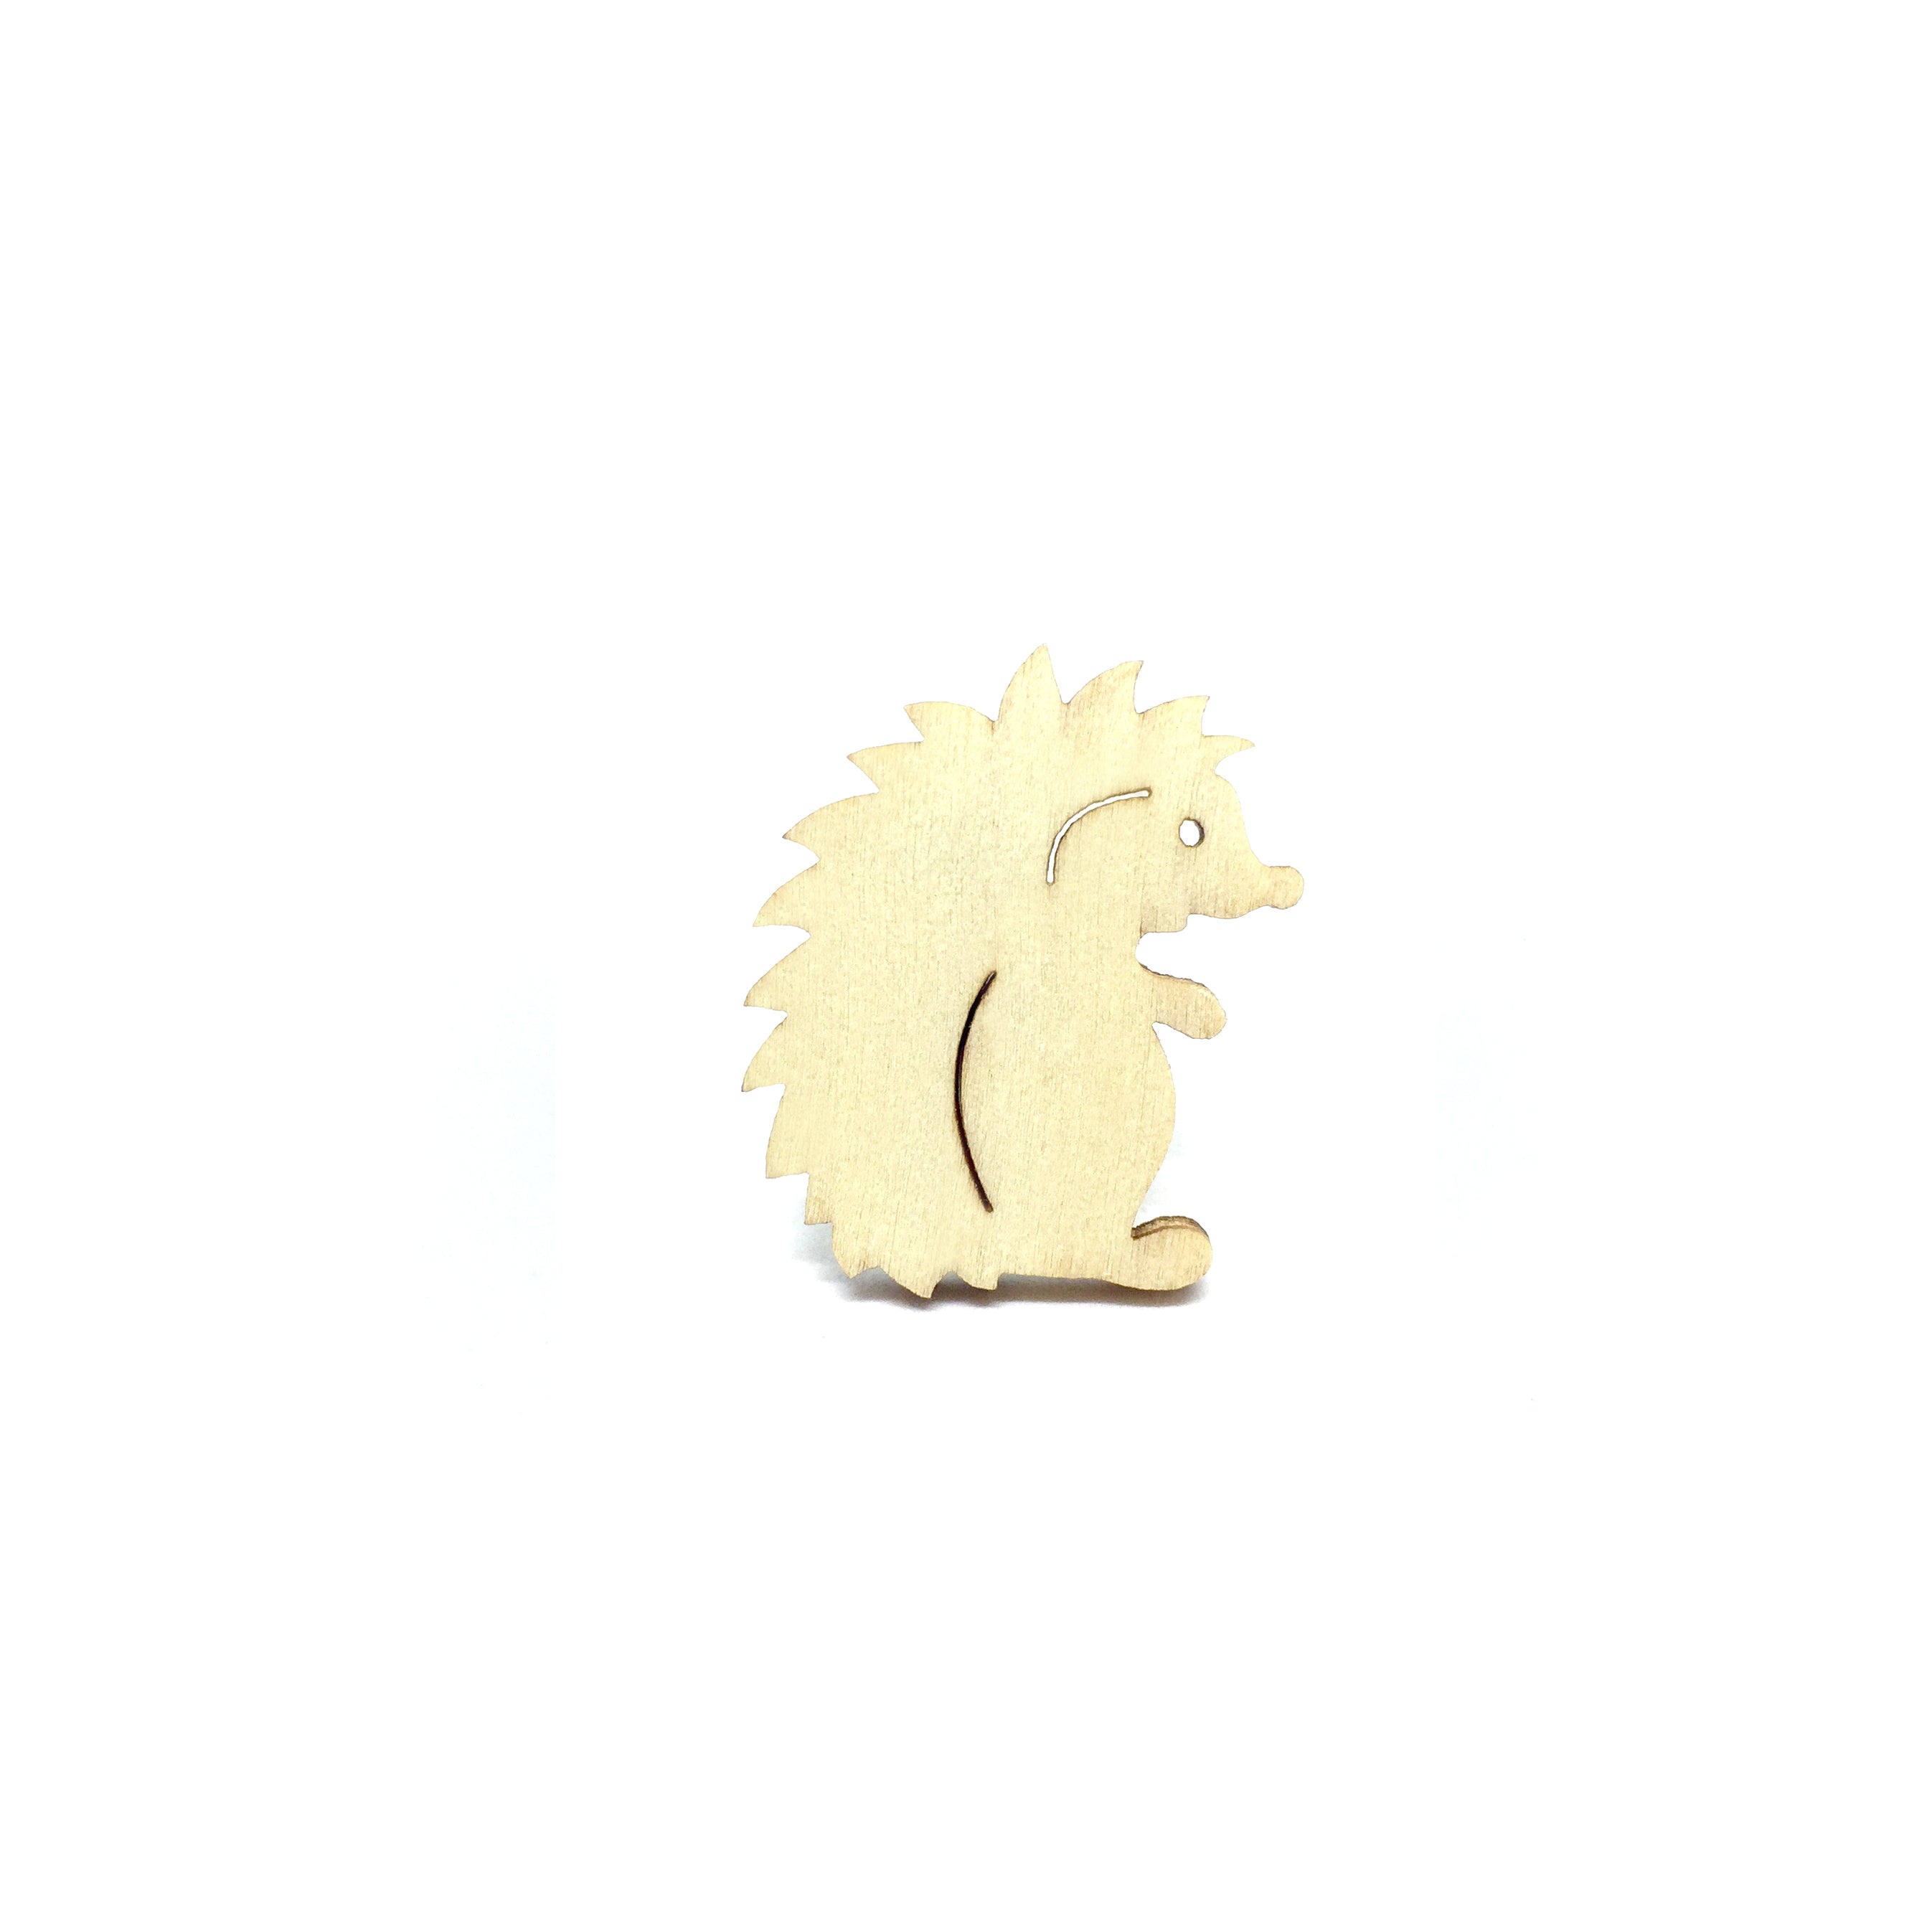 Cute Hedgehog Wooden Brooch Pin - LM